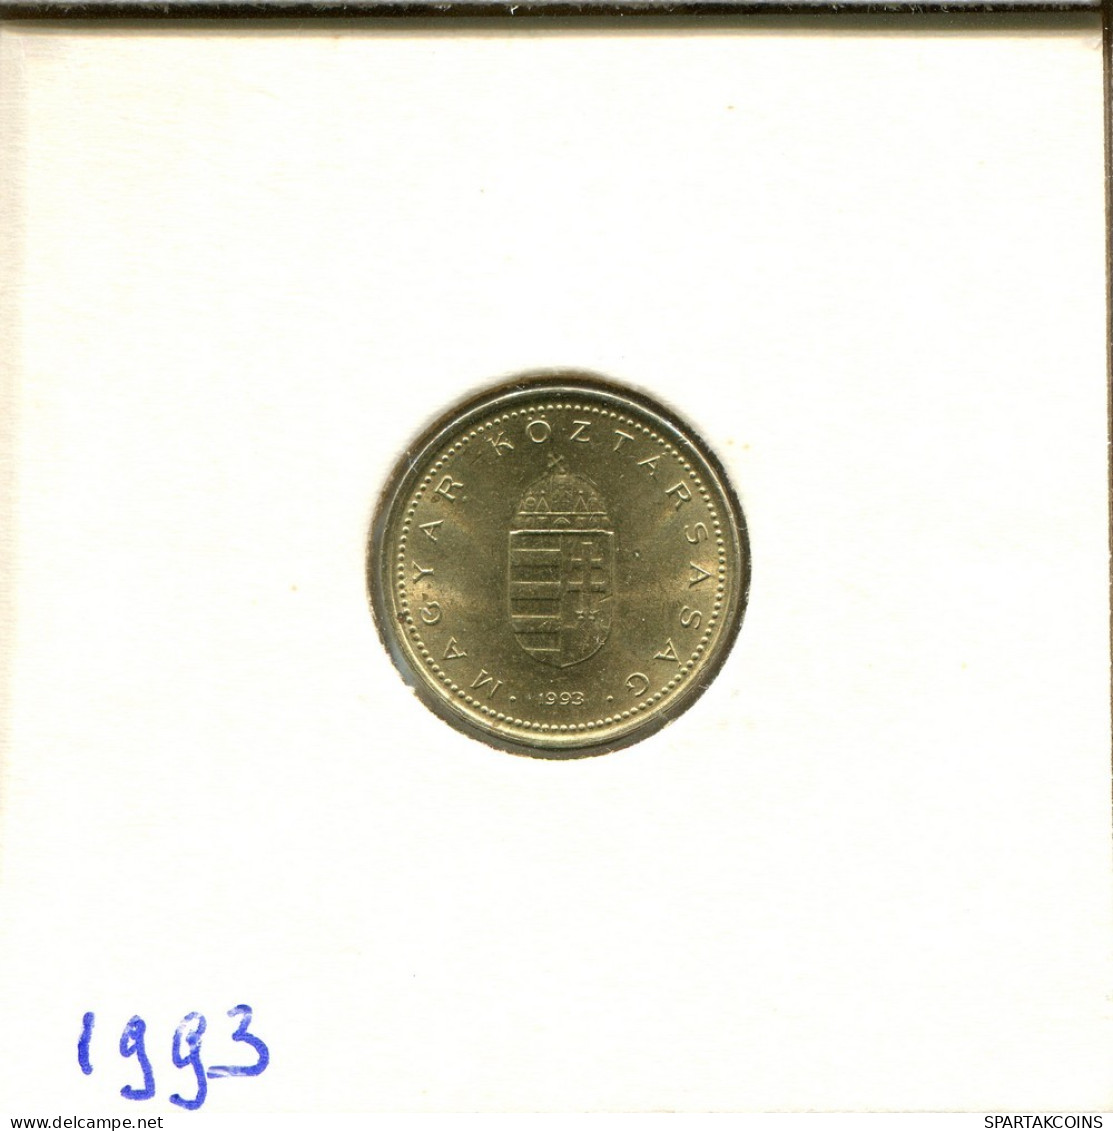 1 FORINT 1993 HUNGARY Coin #AS884.U.A - Hungría